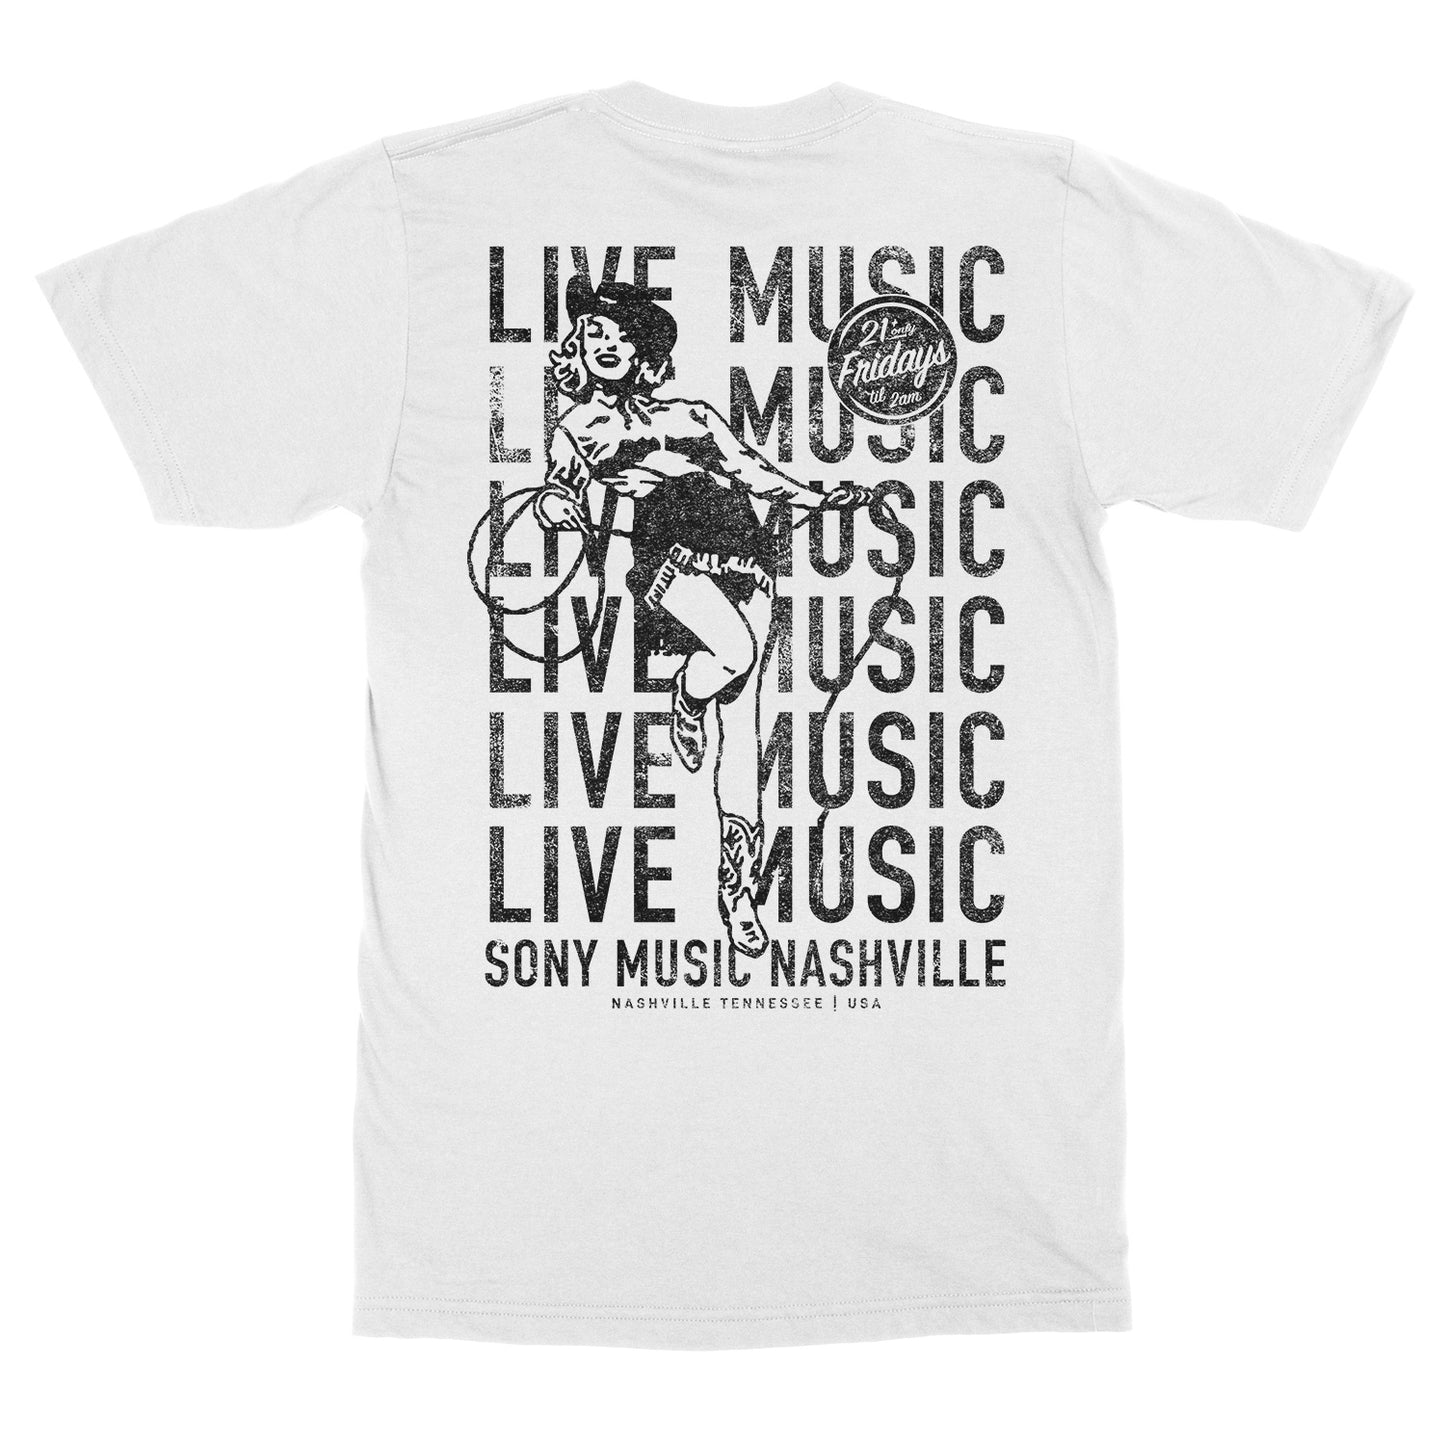 Sony Music Nashville "Live Music" T-Shirt